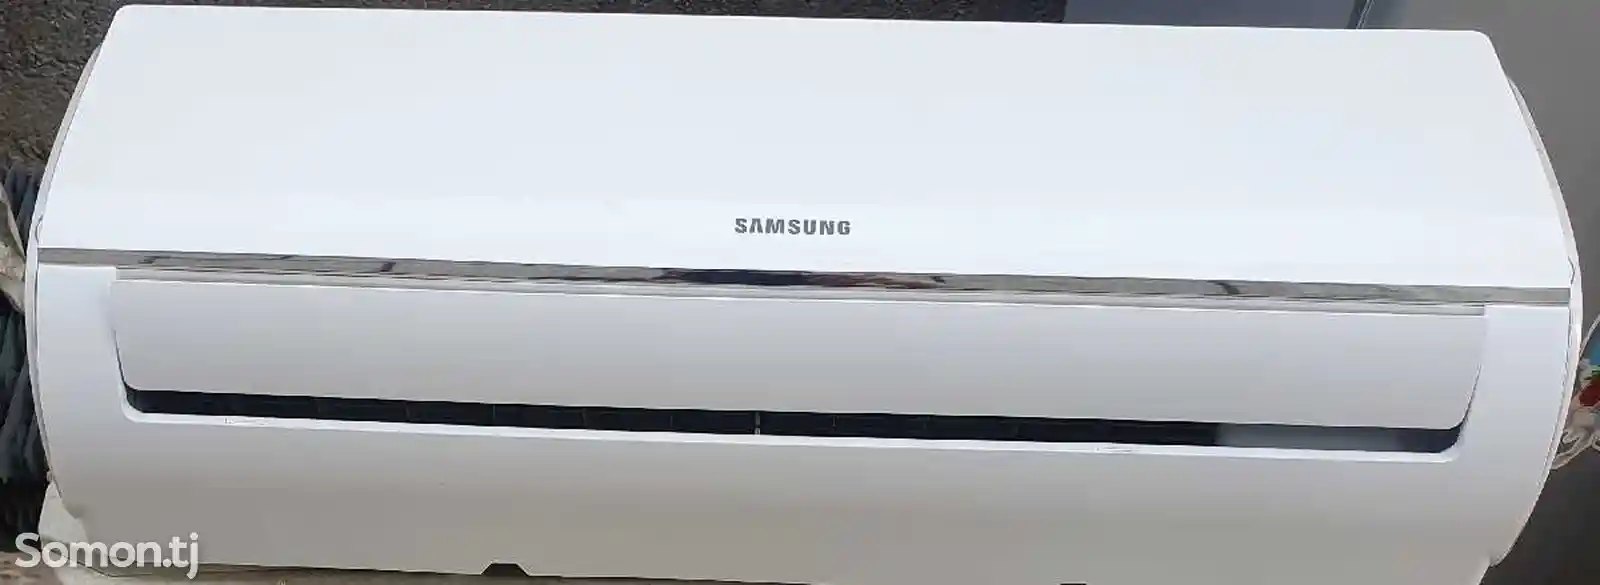 Кондиционер Samsung 12куб